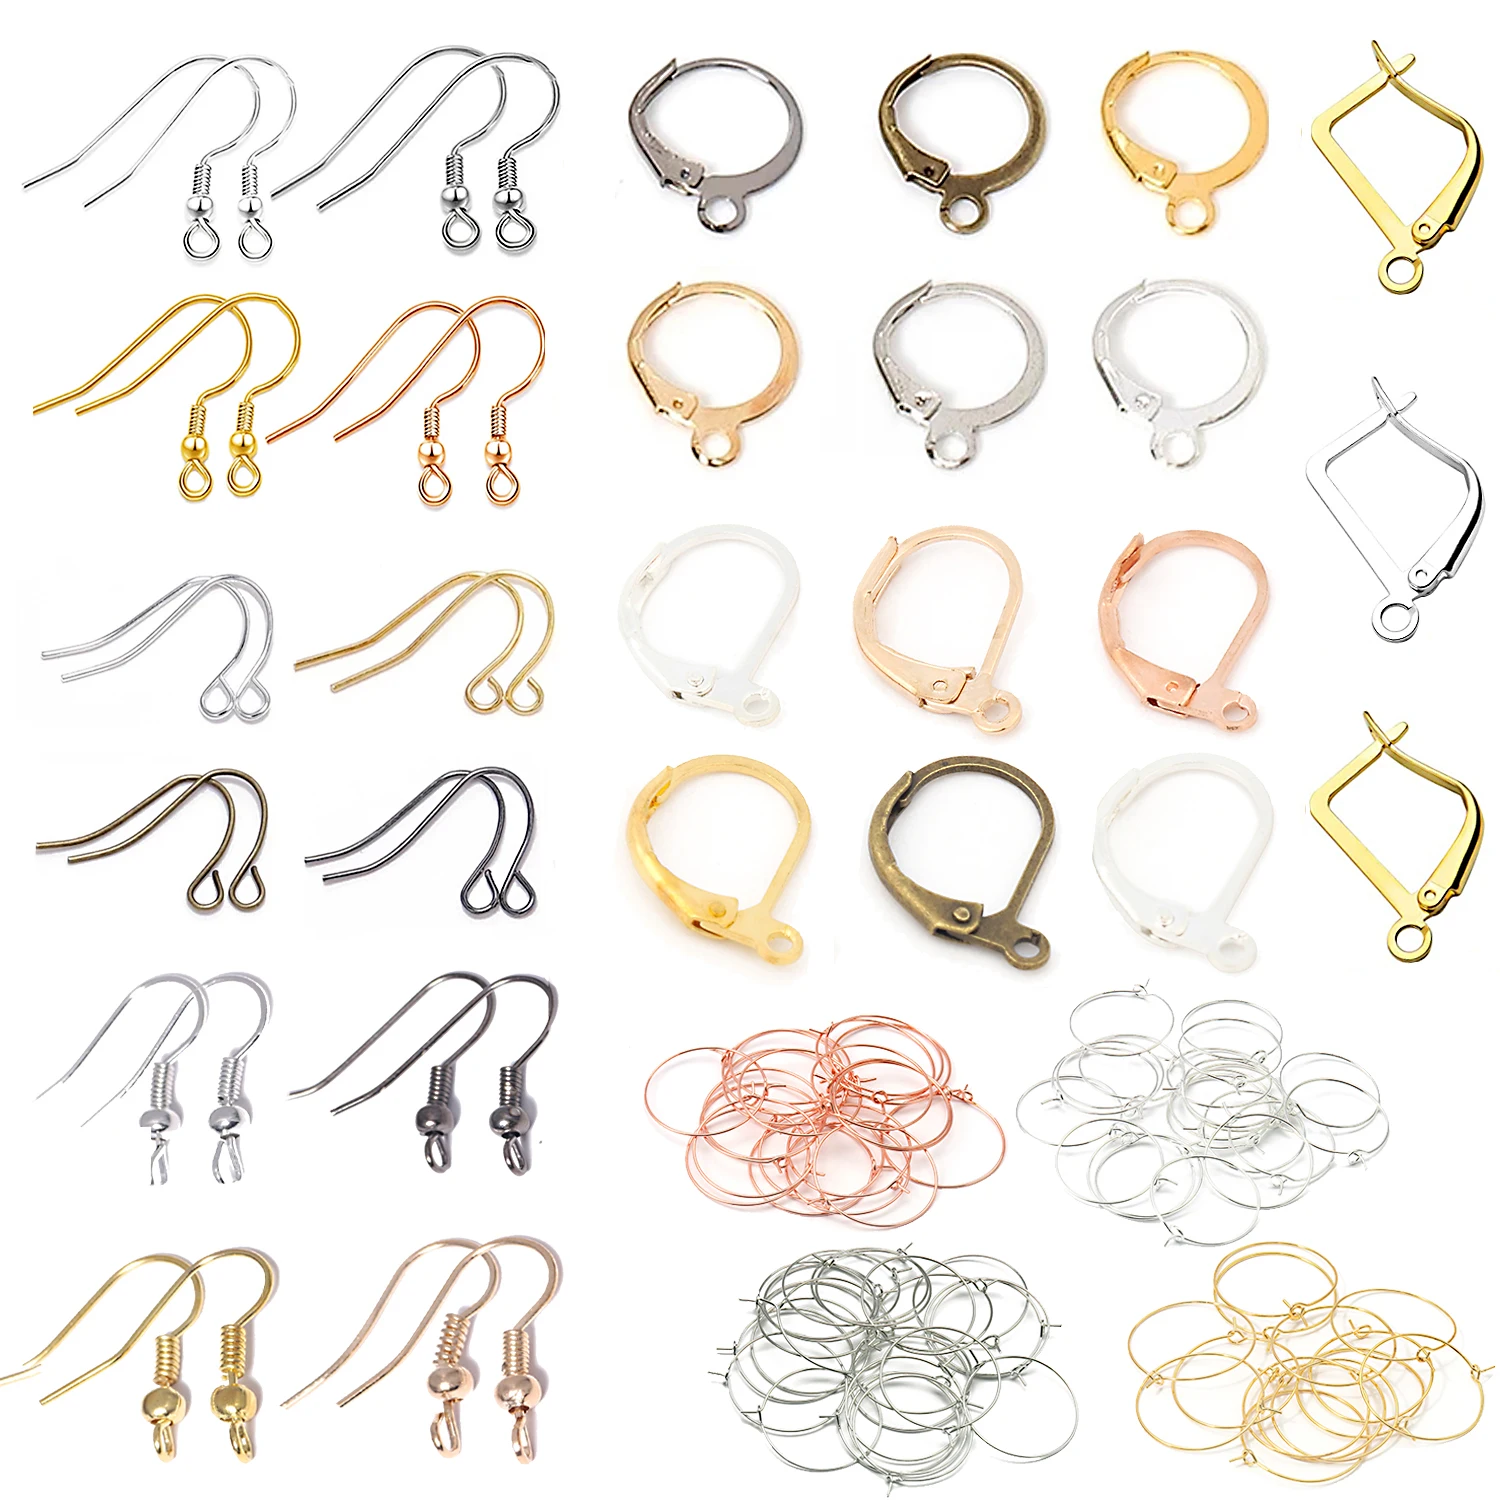 Stainless Steel French Earrings Clasps Hooks Fittings DIY Jewelry Making Iron Hook Earwire Earring Findings Gold Silver Jewelry